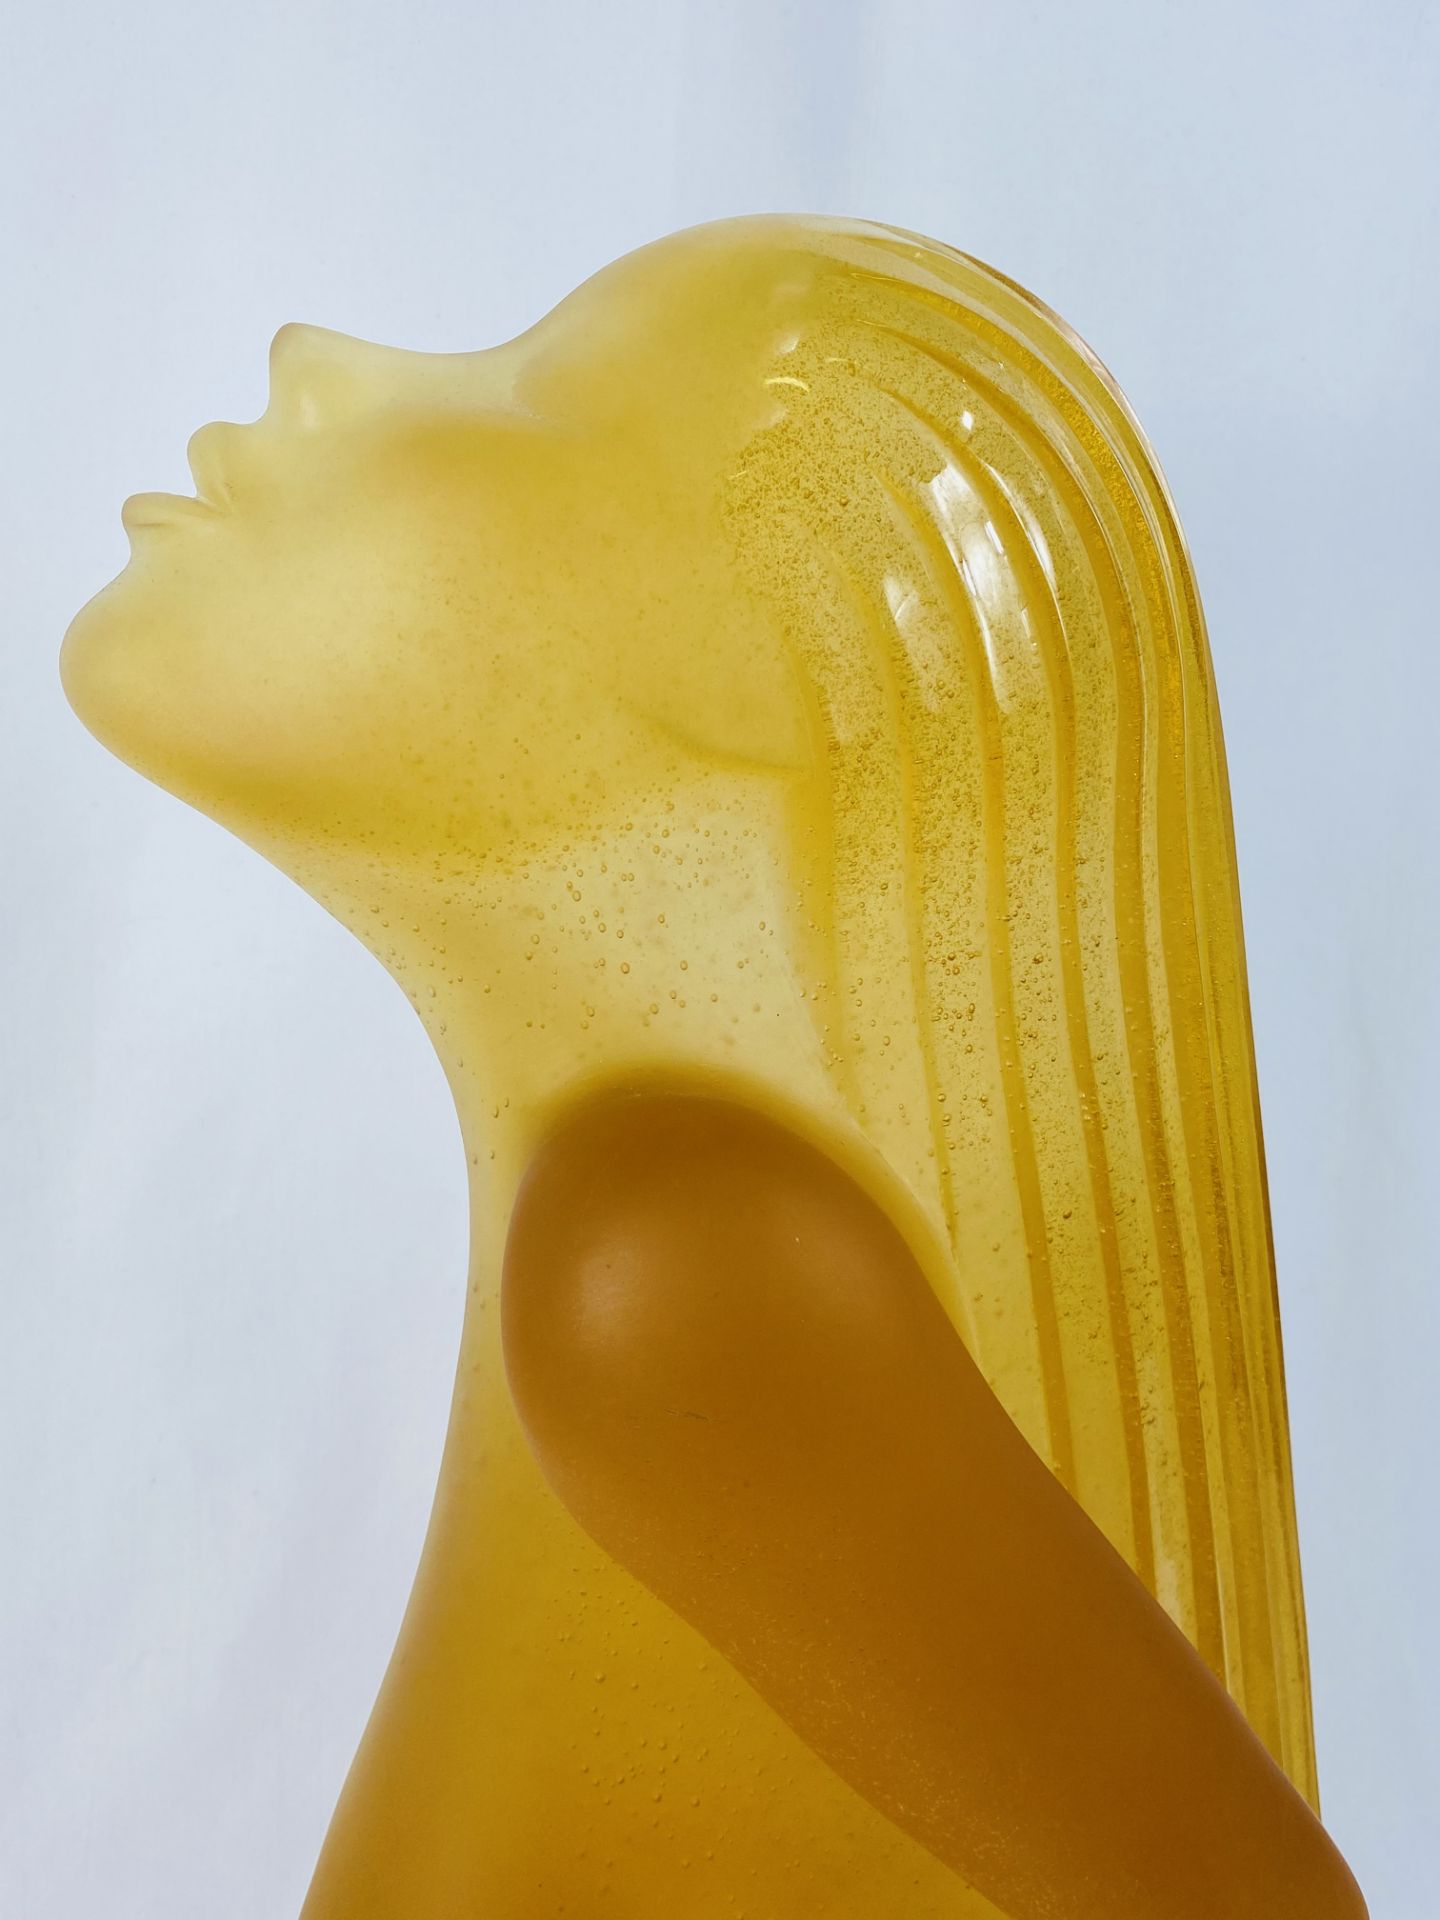 Daum pate de verre pressed glass sculpture designed by Dan Dailey - Image 3 of 5